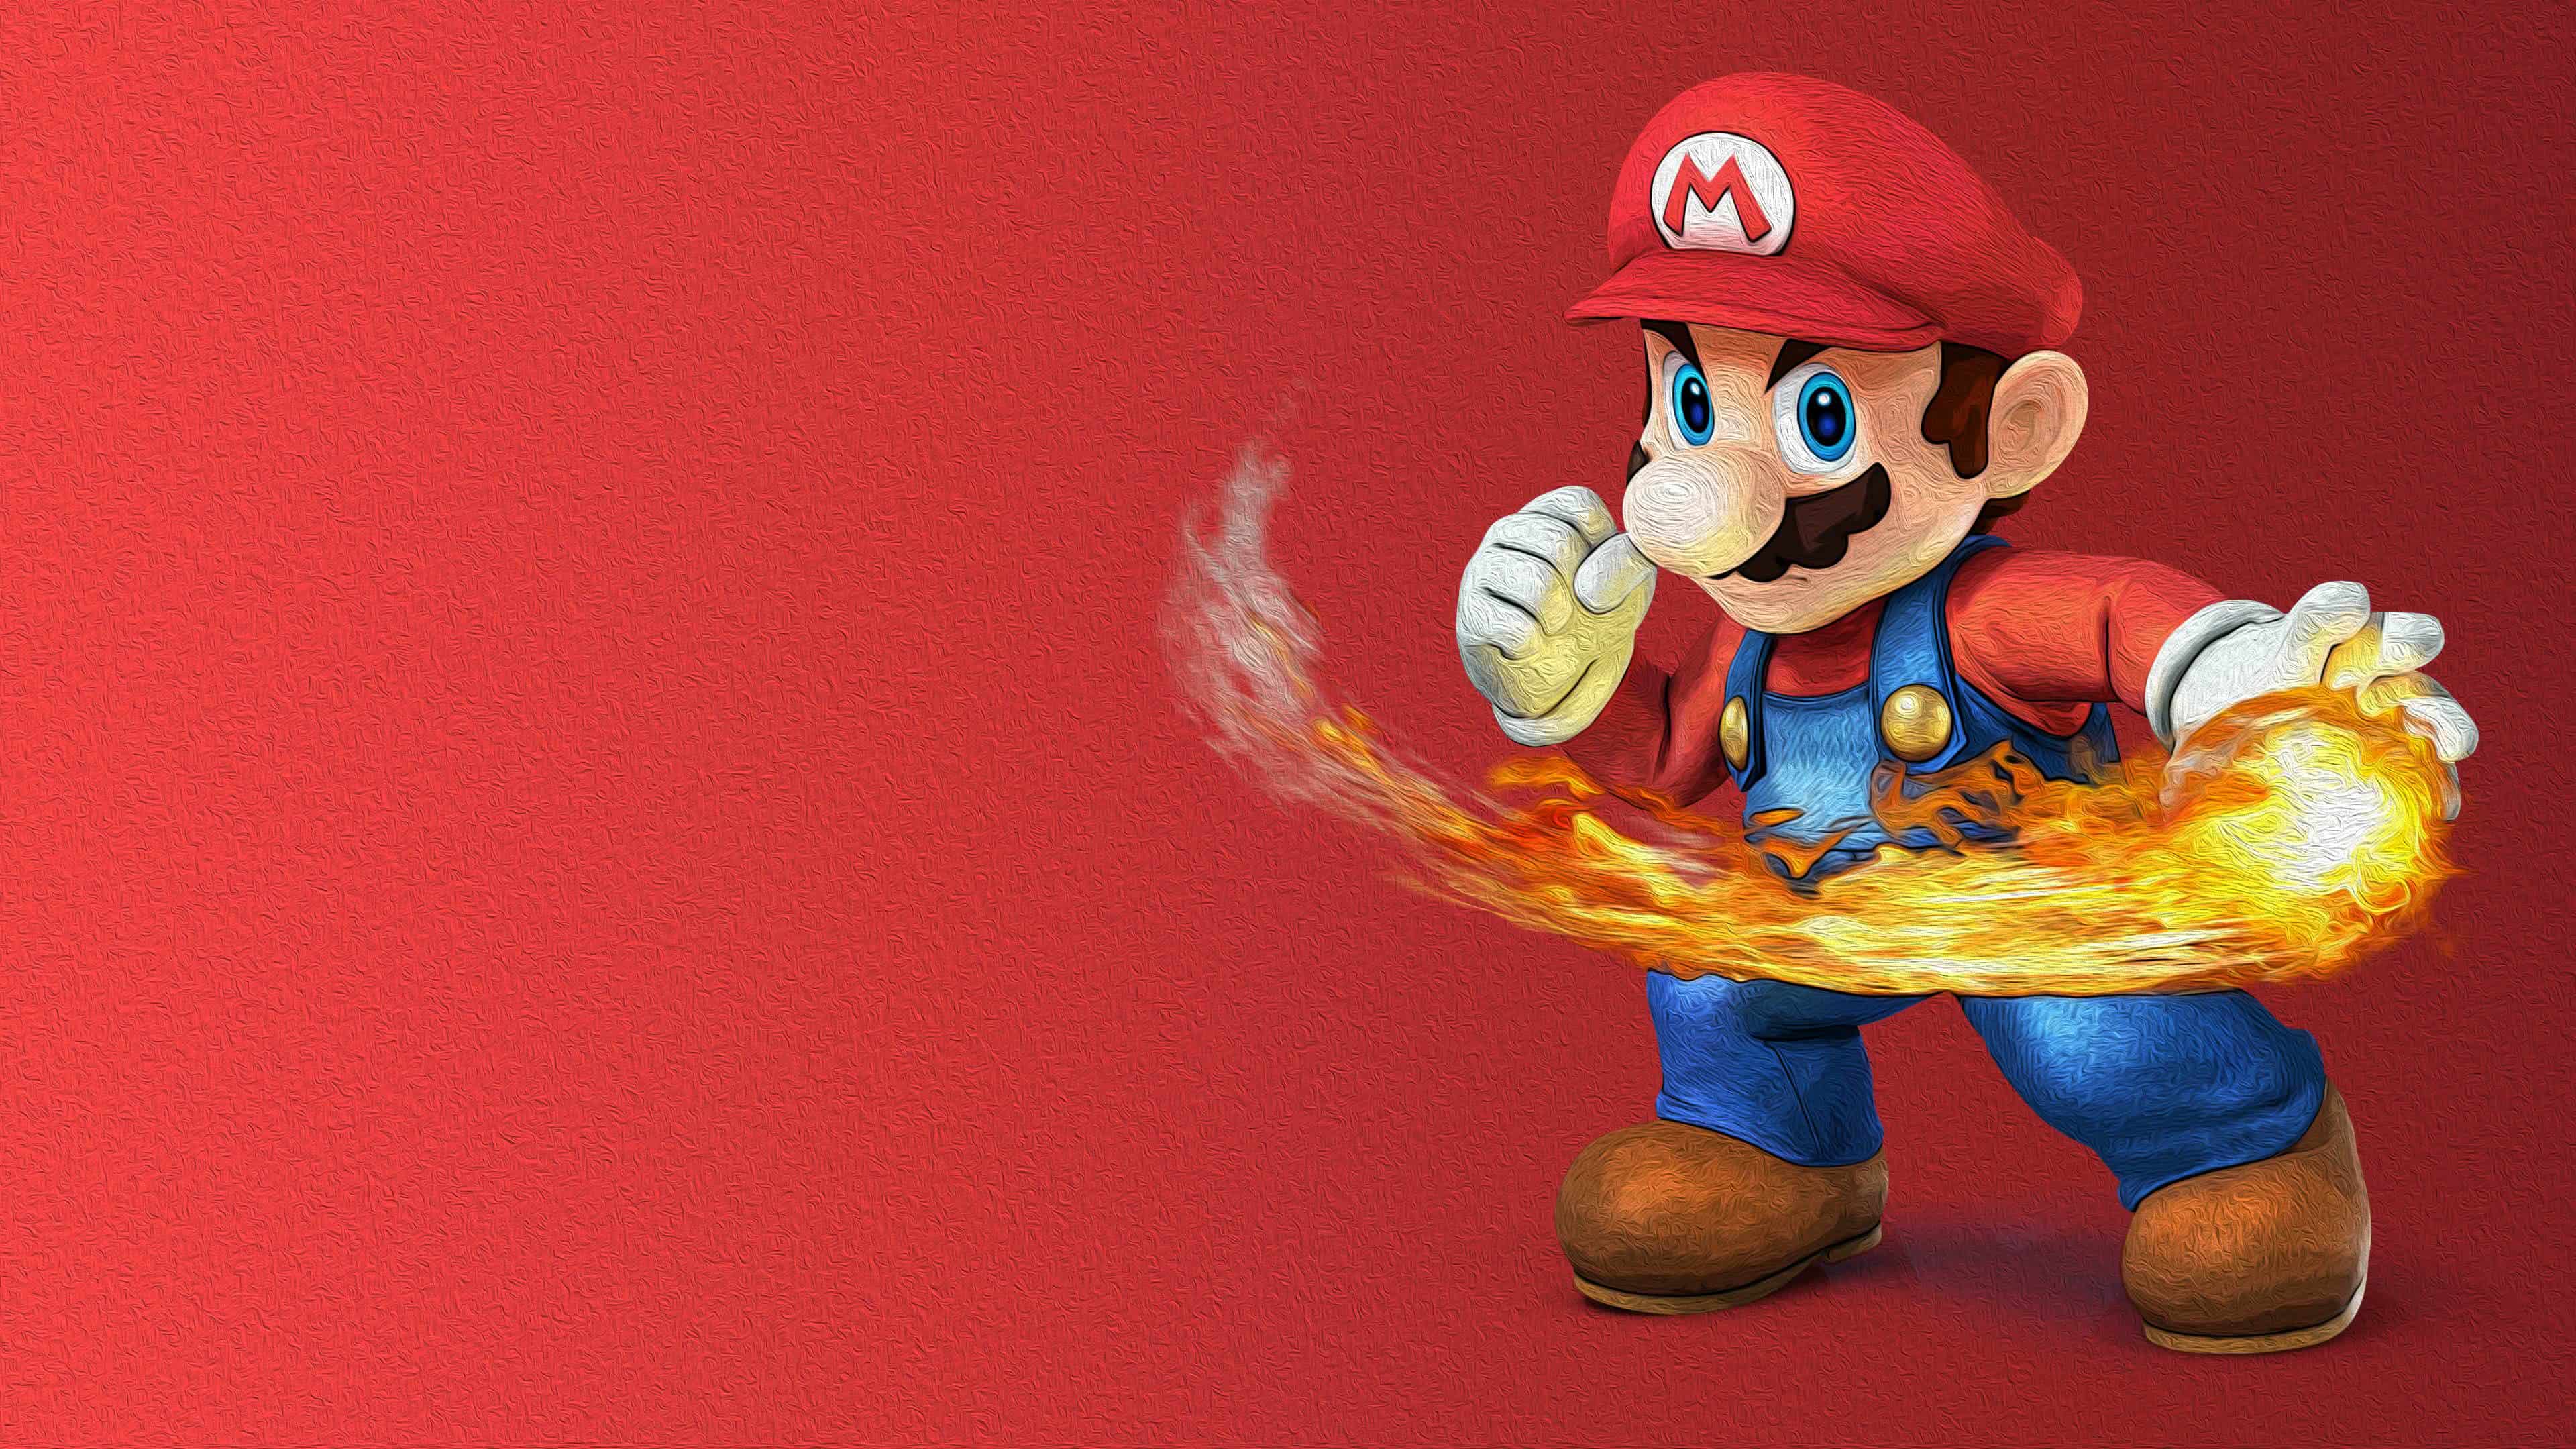 Super Smash Bros Mario Uhd 4k Wallpaper Bros Wallpaper 4k